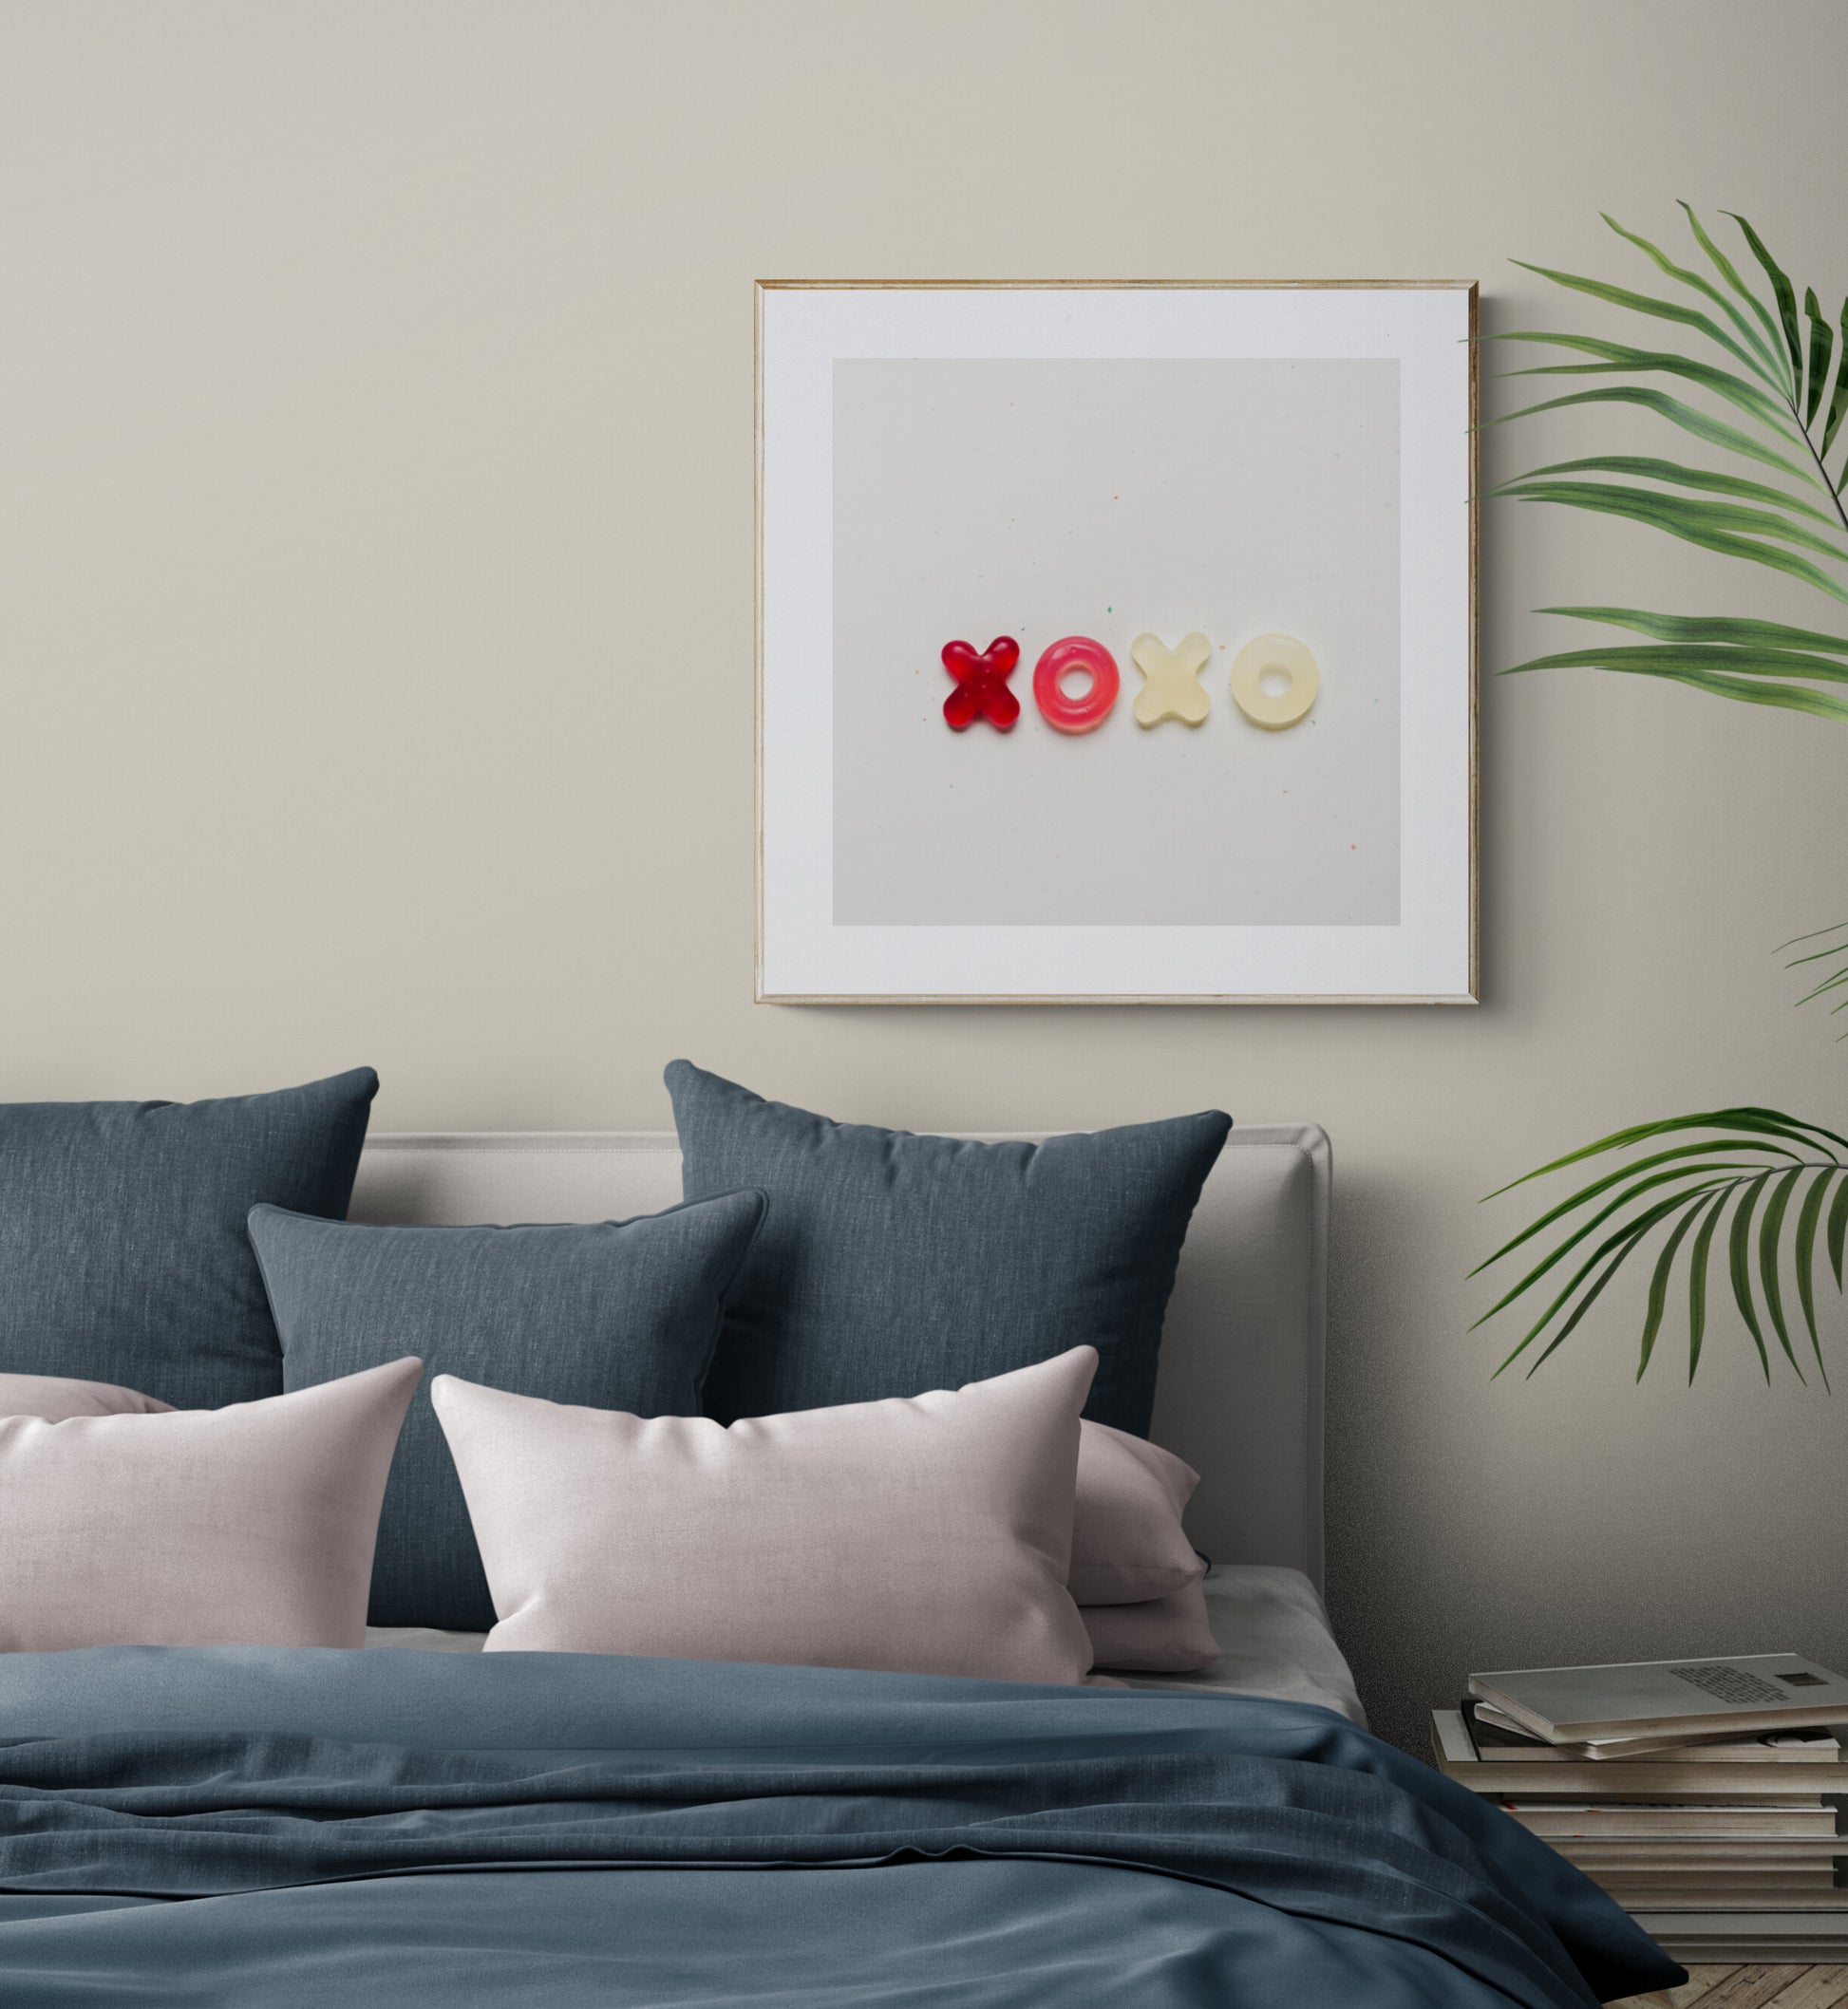 XOXO Photograph as Wall Art in a Bedroom